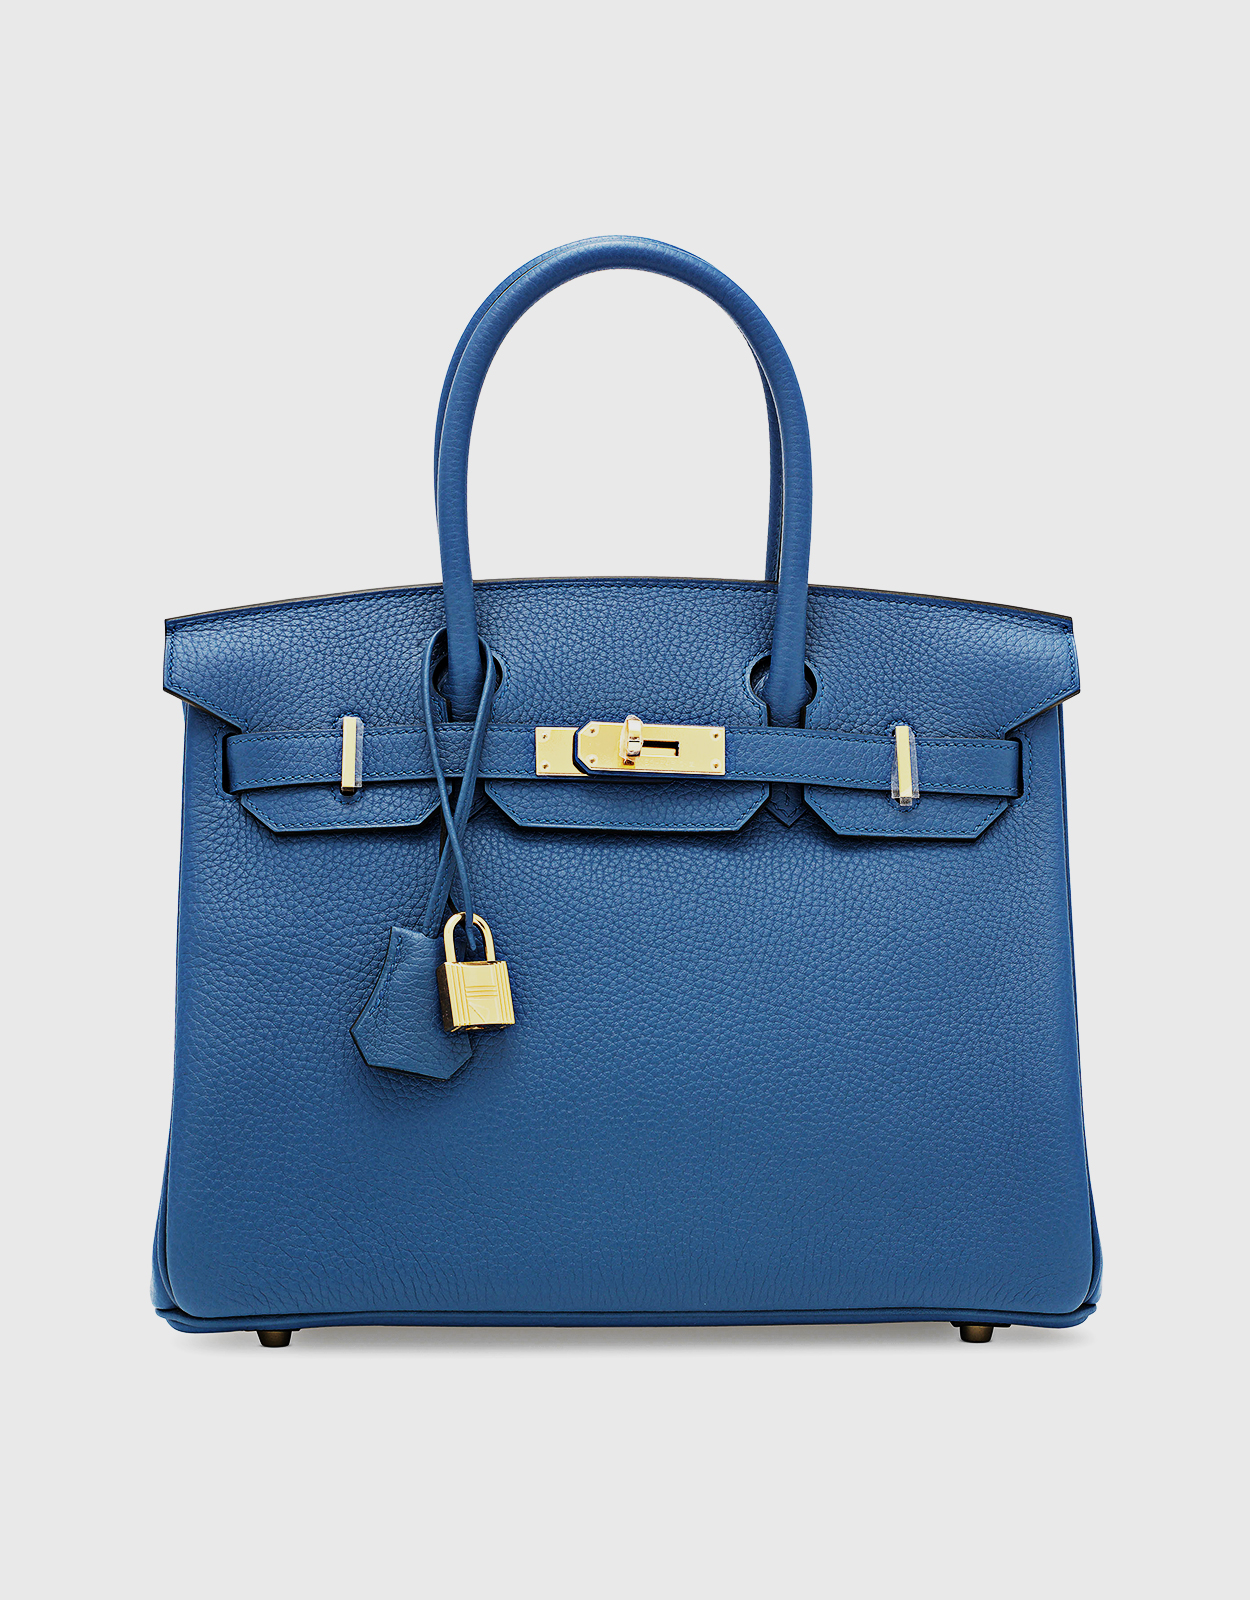 Hermès Birkin 30 Taurillon Clemence Leather Handbag